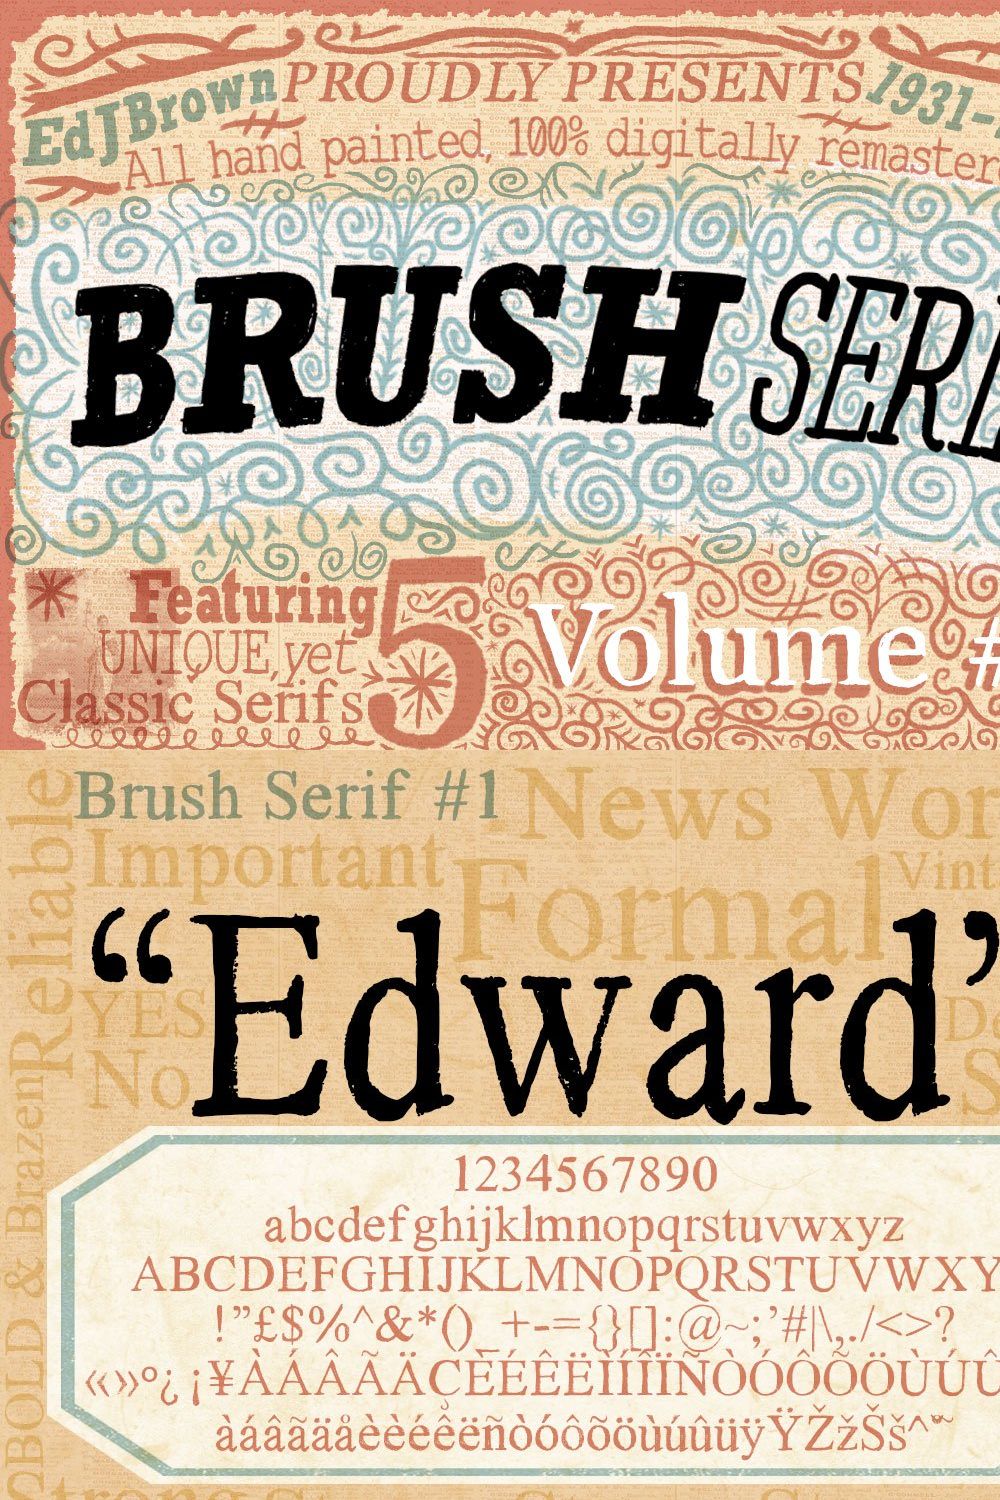 Entire Brush Serif Family pinterest preview image.